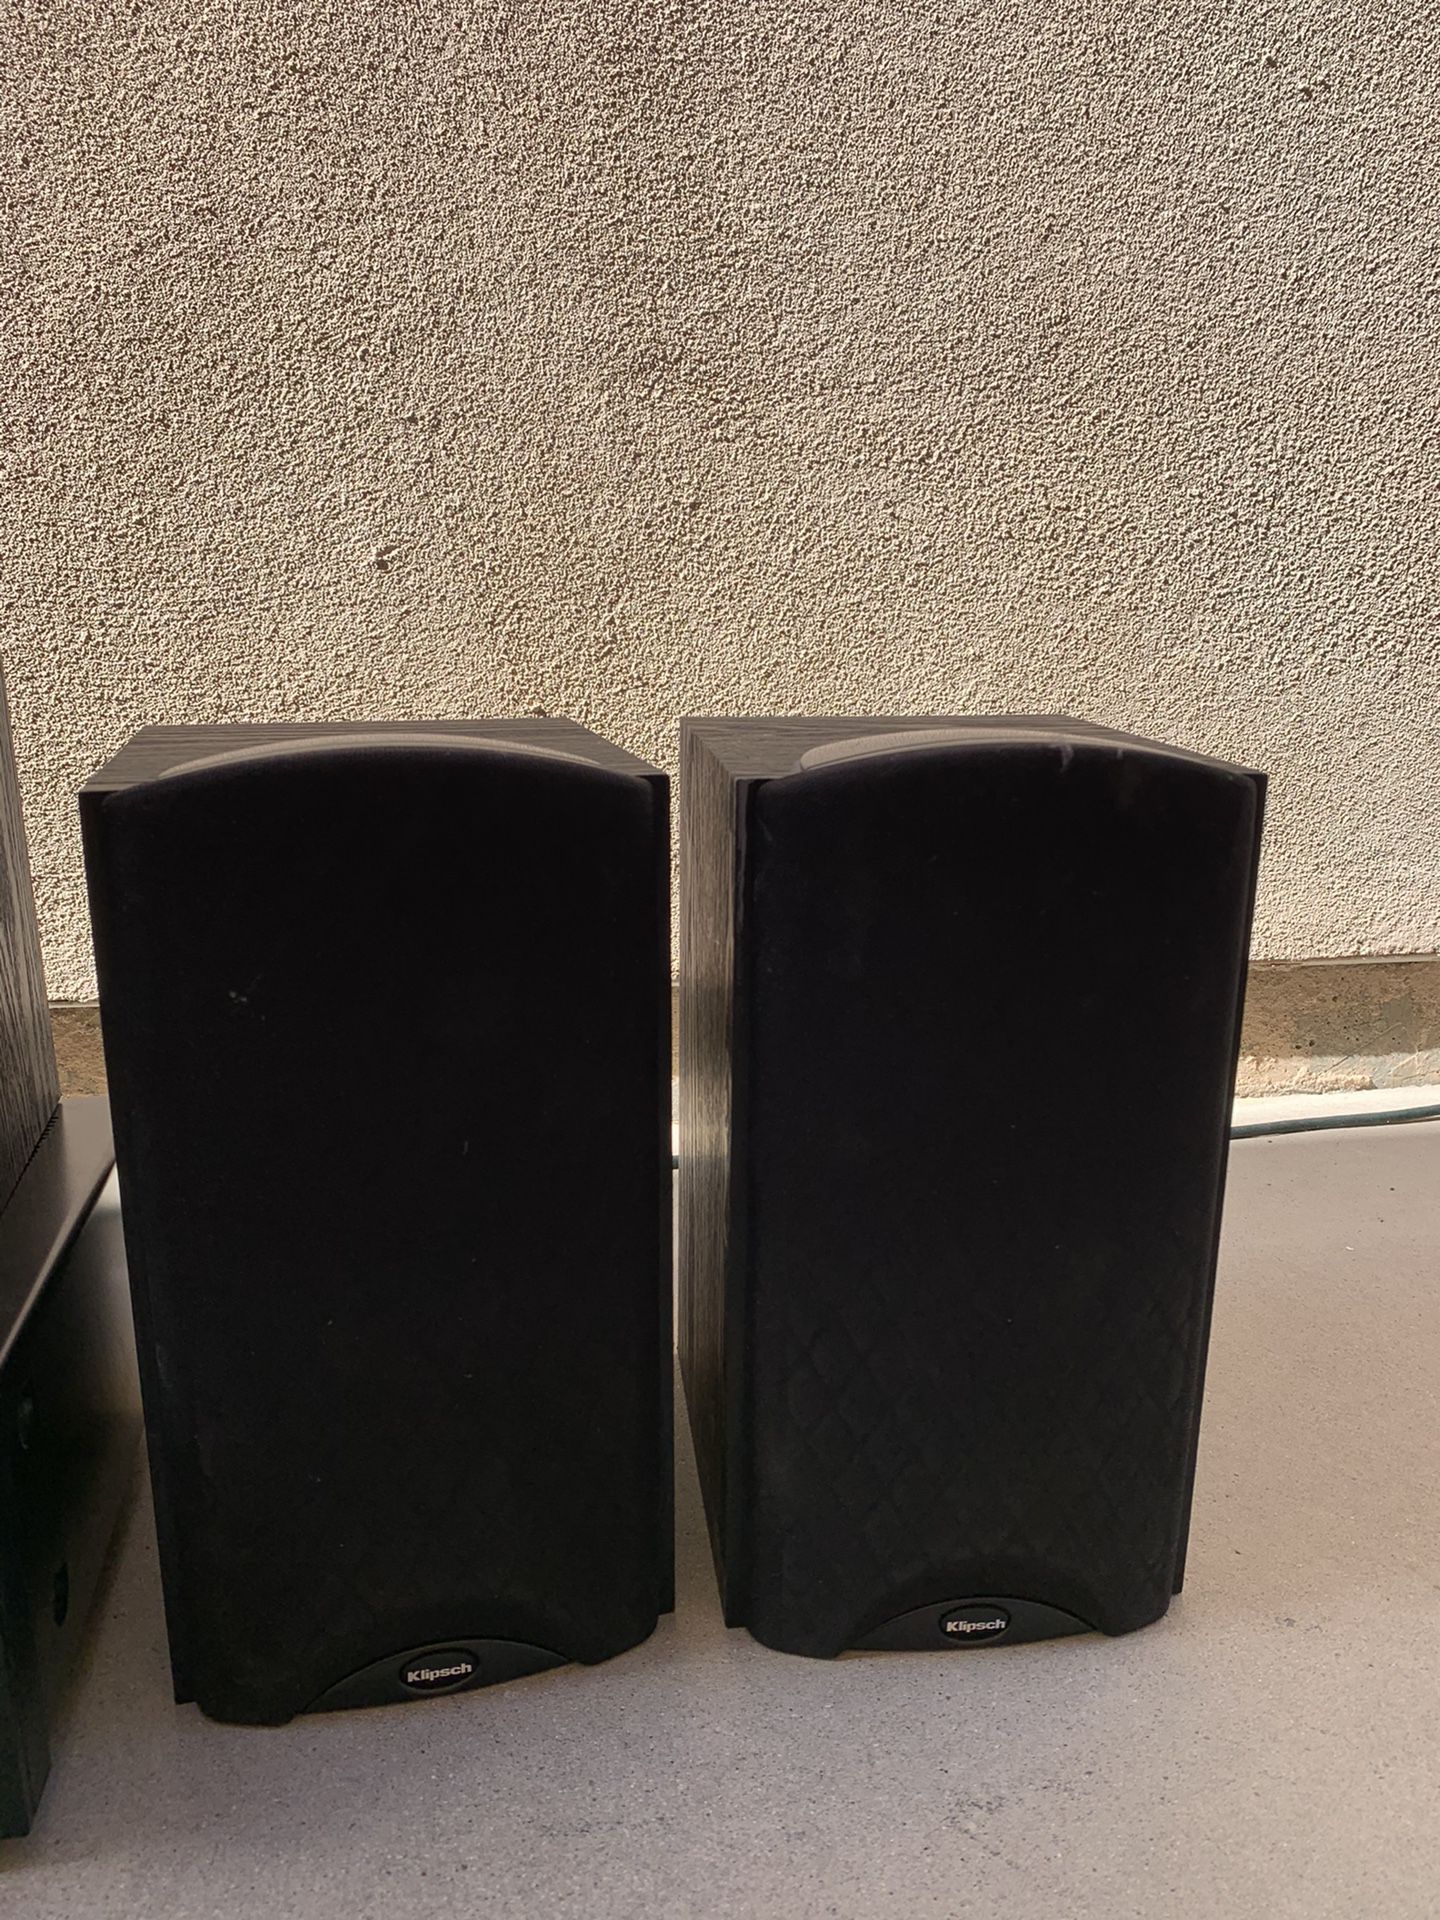 Klipsch speakers, wall mounts and Onkyo receiver